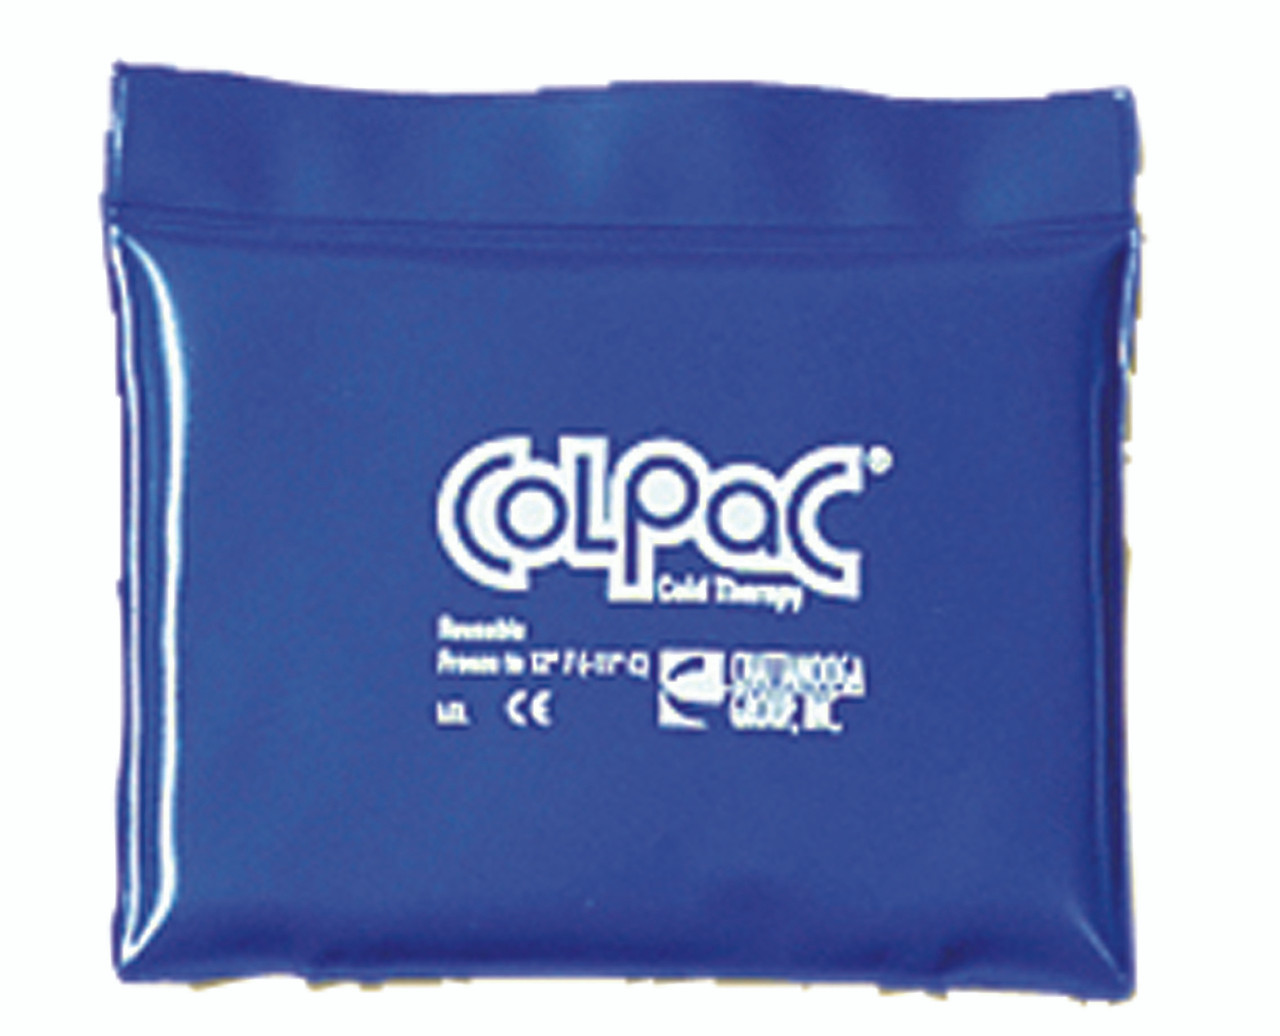 ColPaC Blue Vinyl Cold Pack Blue Vinyl Cold Pack - quarter size - 5.5" x 7.5"